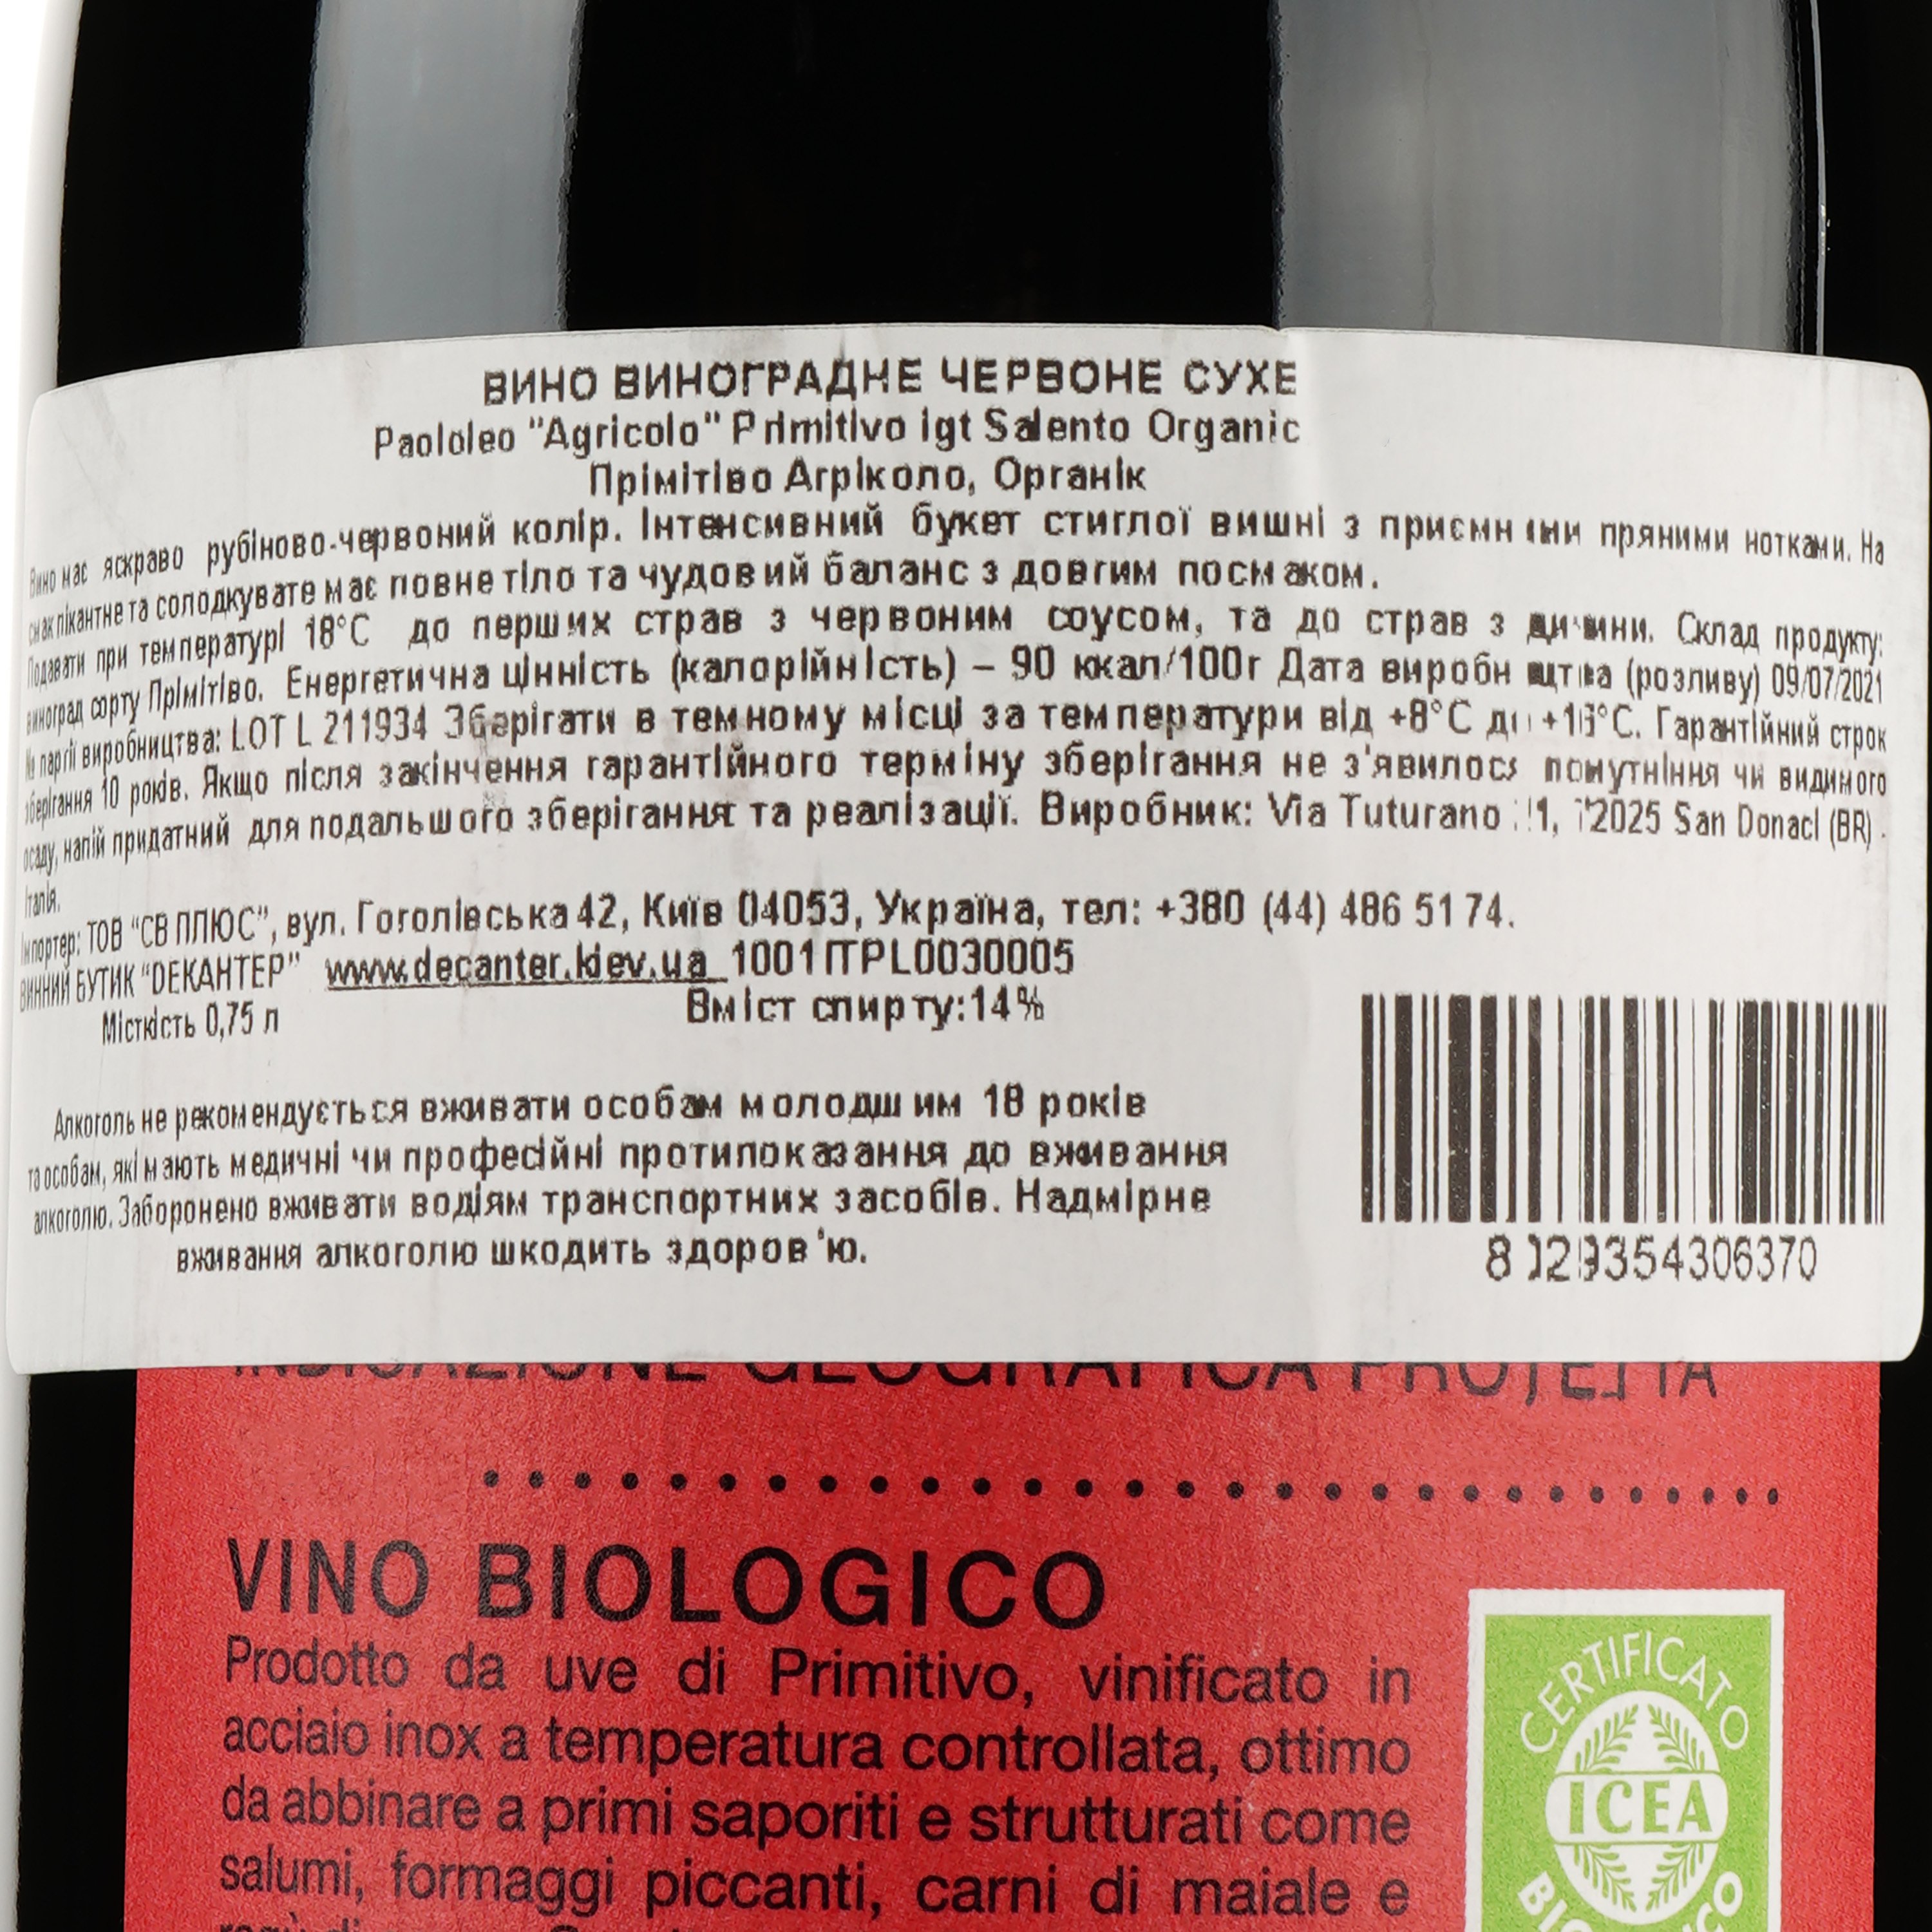 Вино Paololeo Agricolo Primitivo Salento Organic IGT, красное, сухое, 0,75 л - фото 3